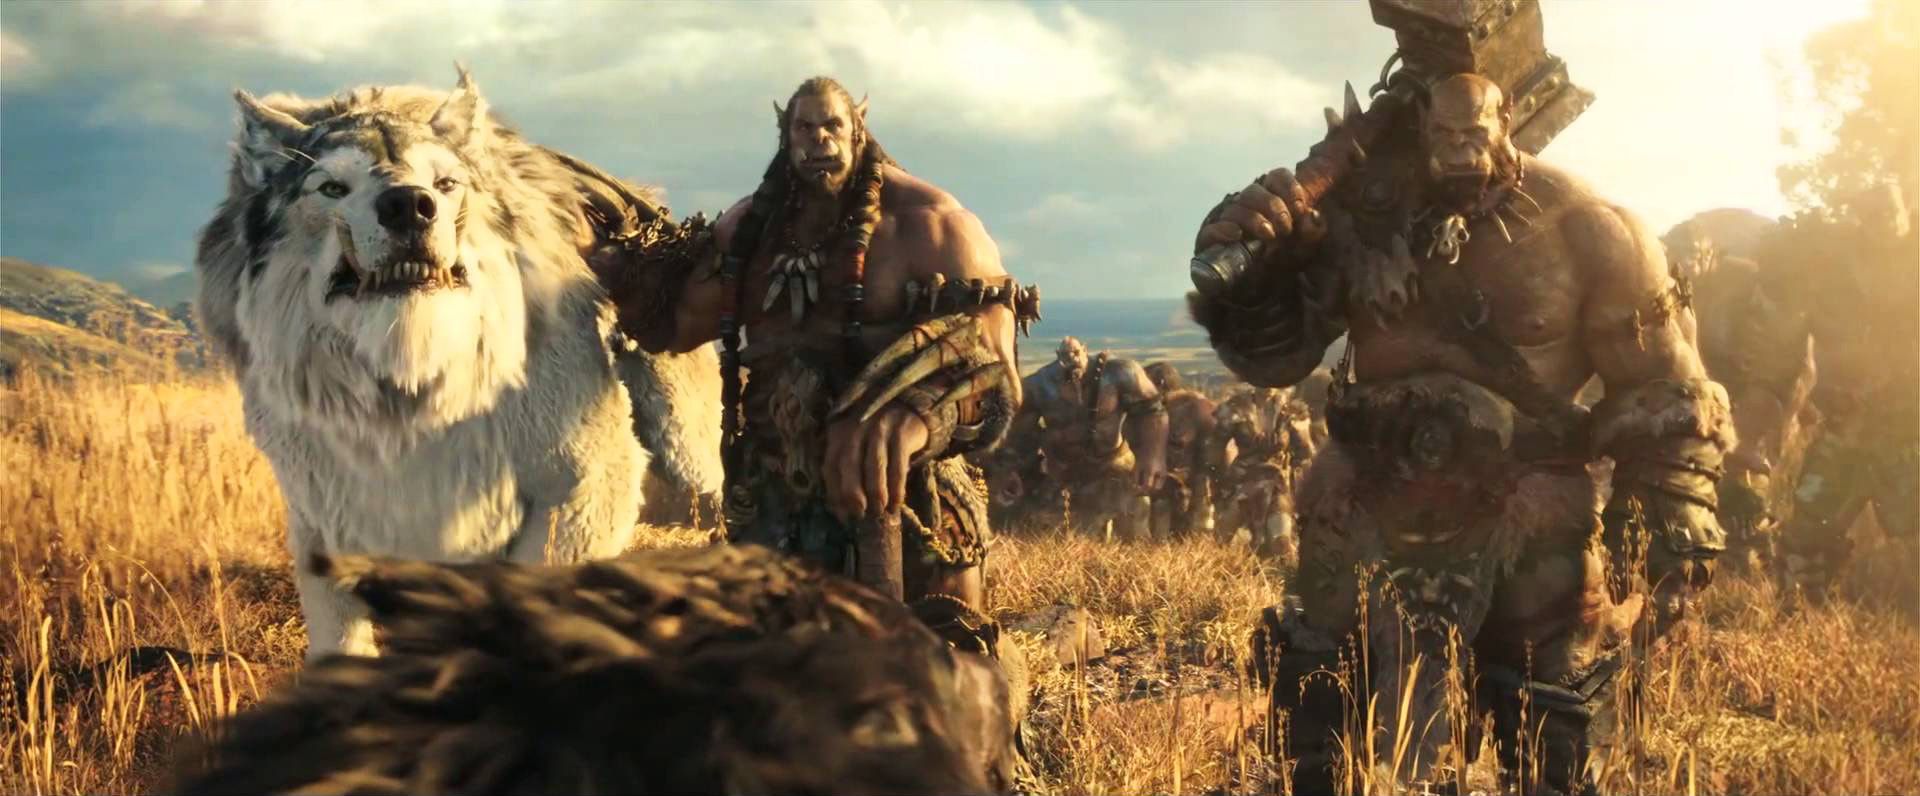 Warcraft movie orcs